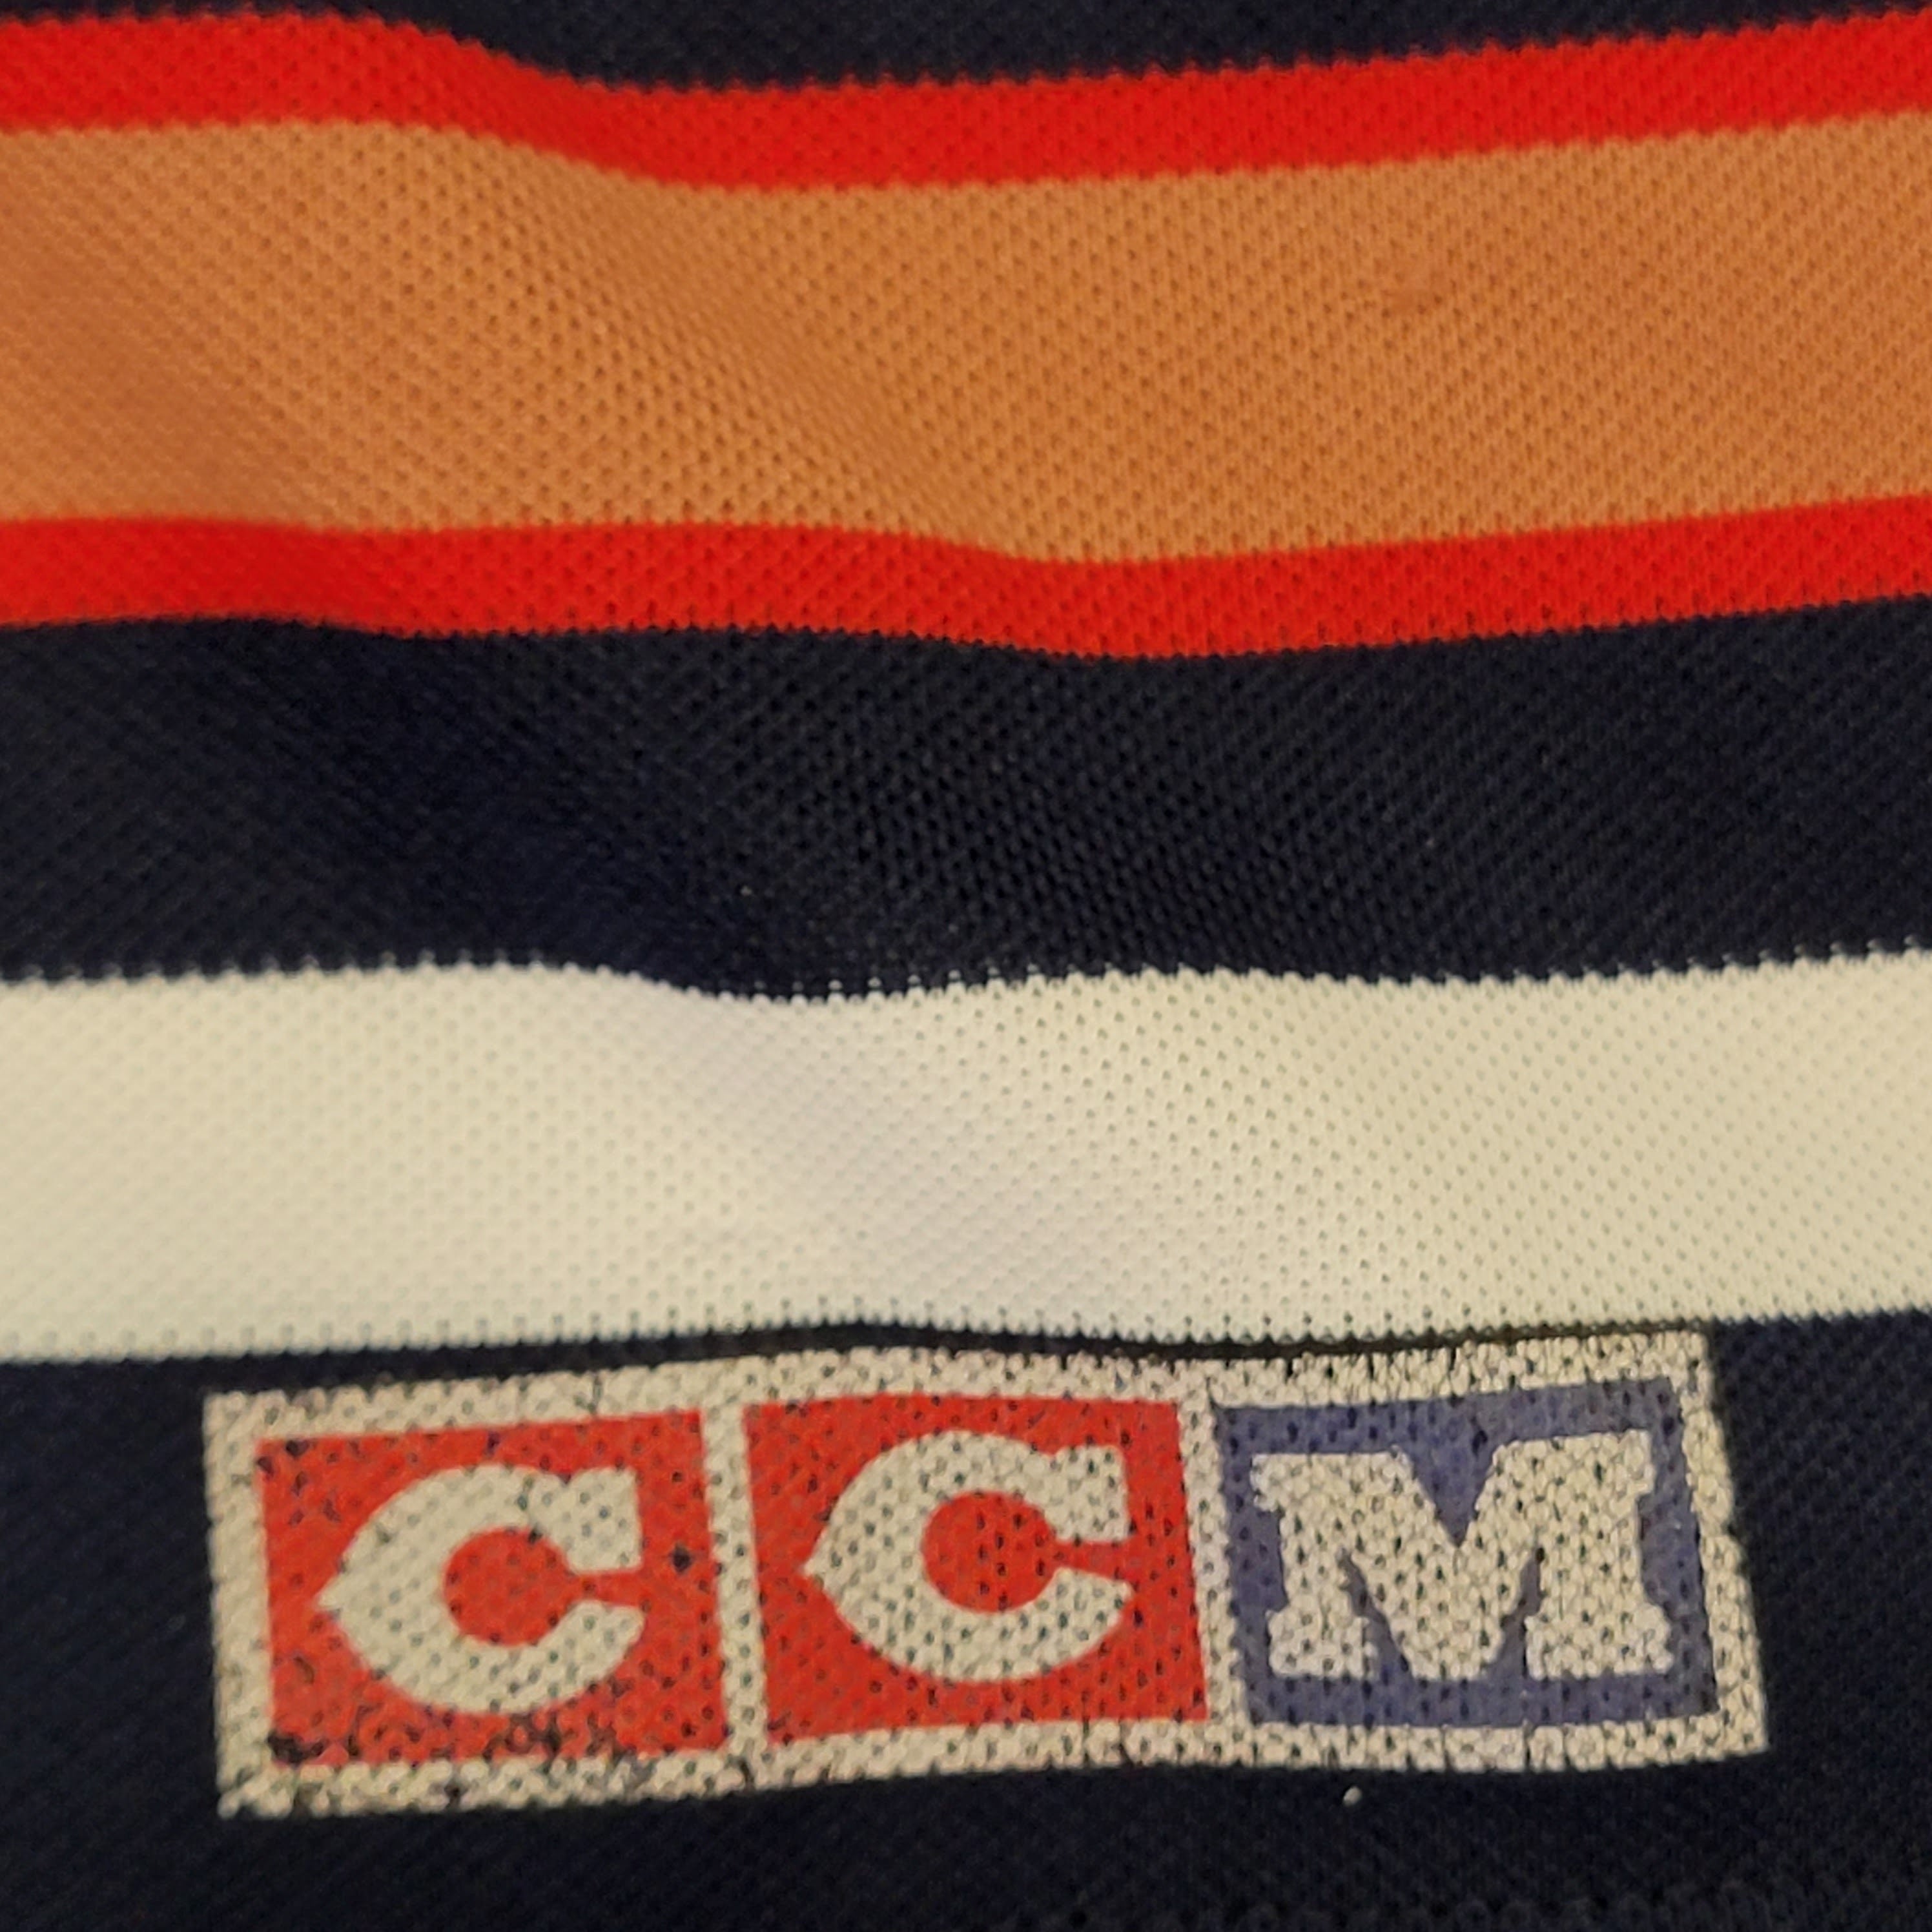 Edmonton Oilers Vintage Ccm Hockey Jersey Navy Blue and Orange Shirt